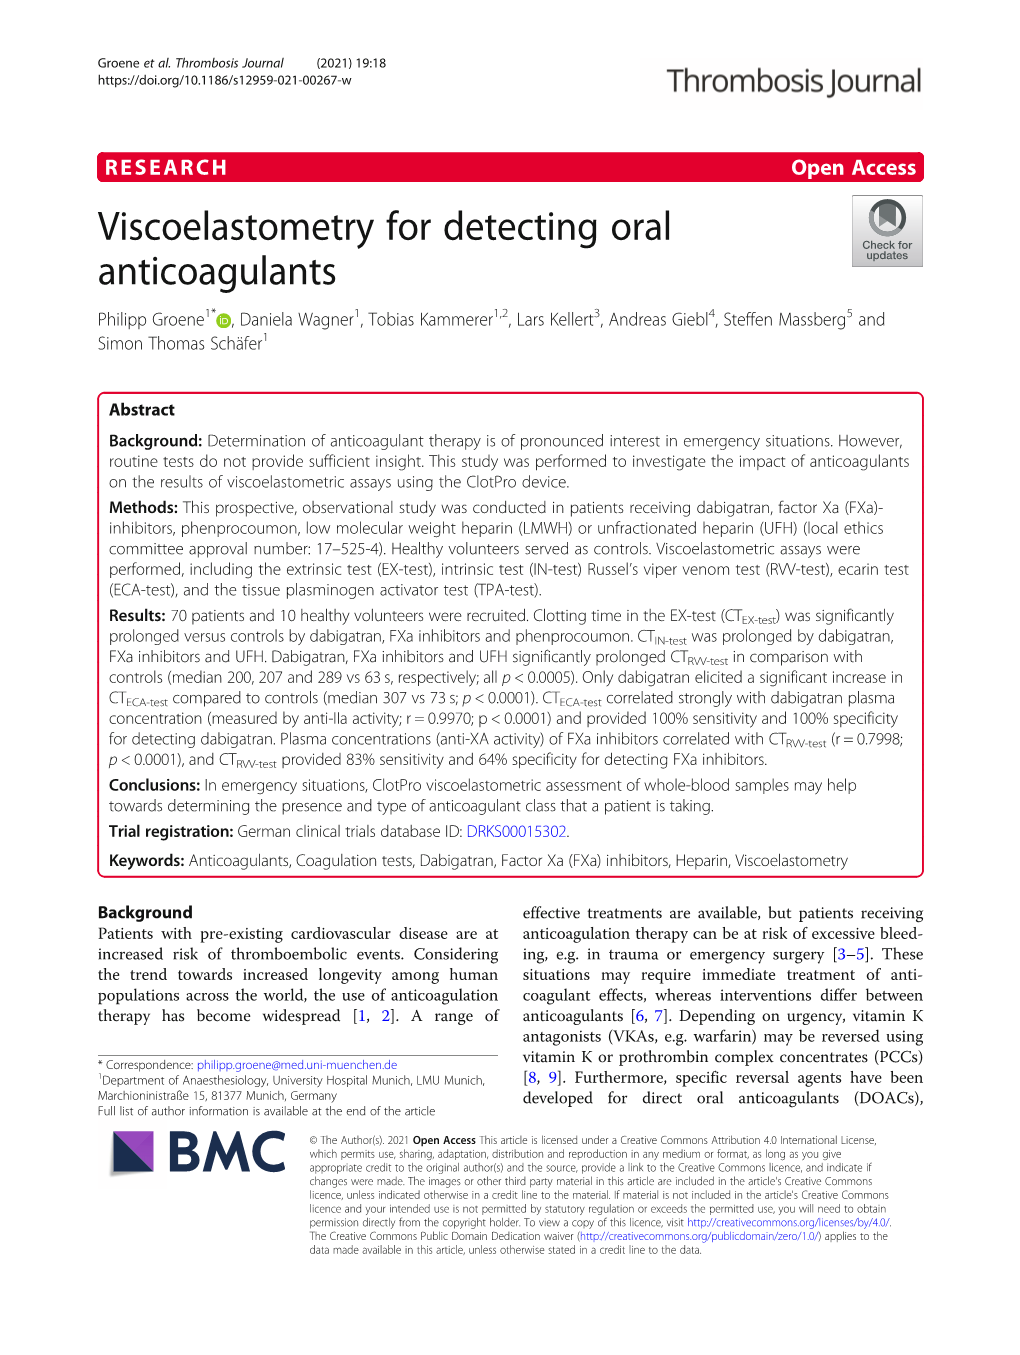 Viscoelastometry for Detecting Oral Anticoagulants